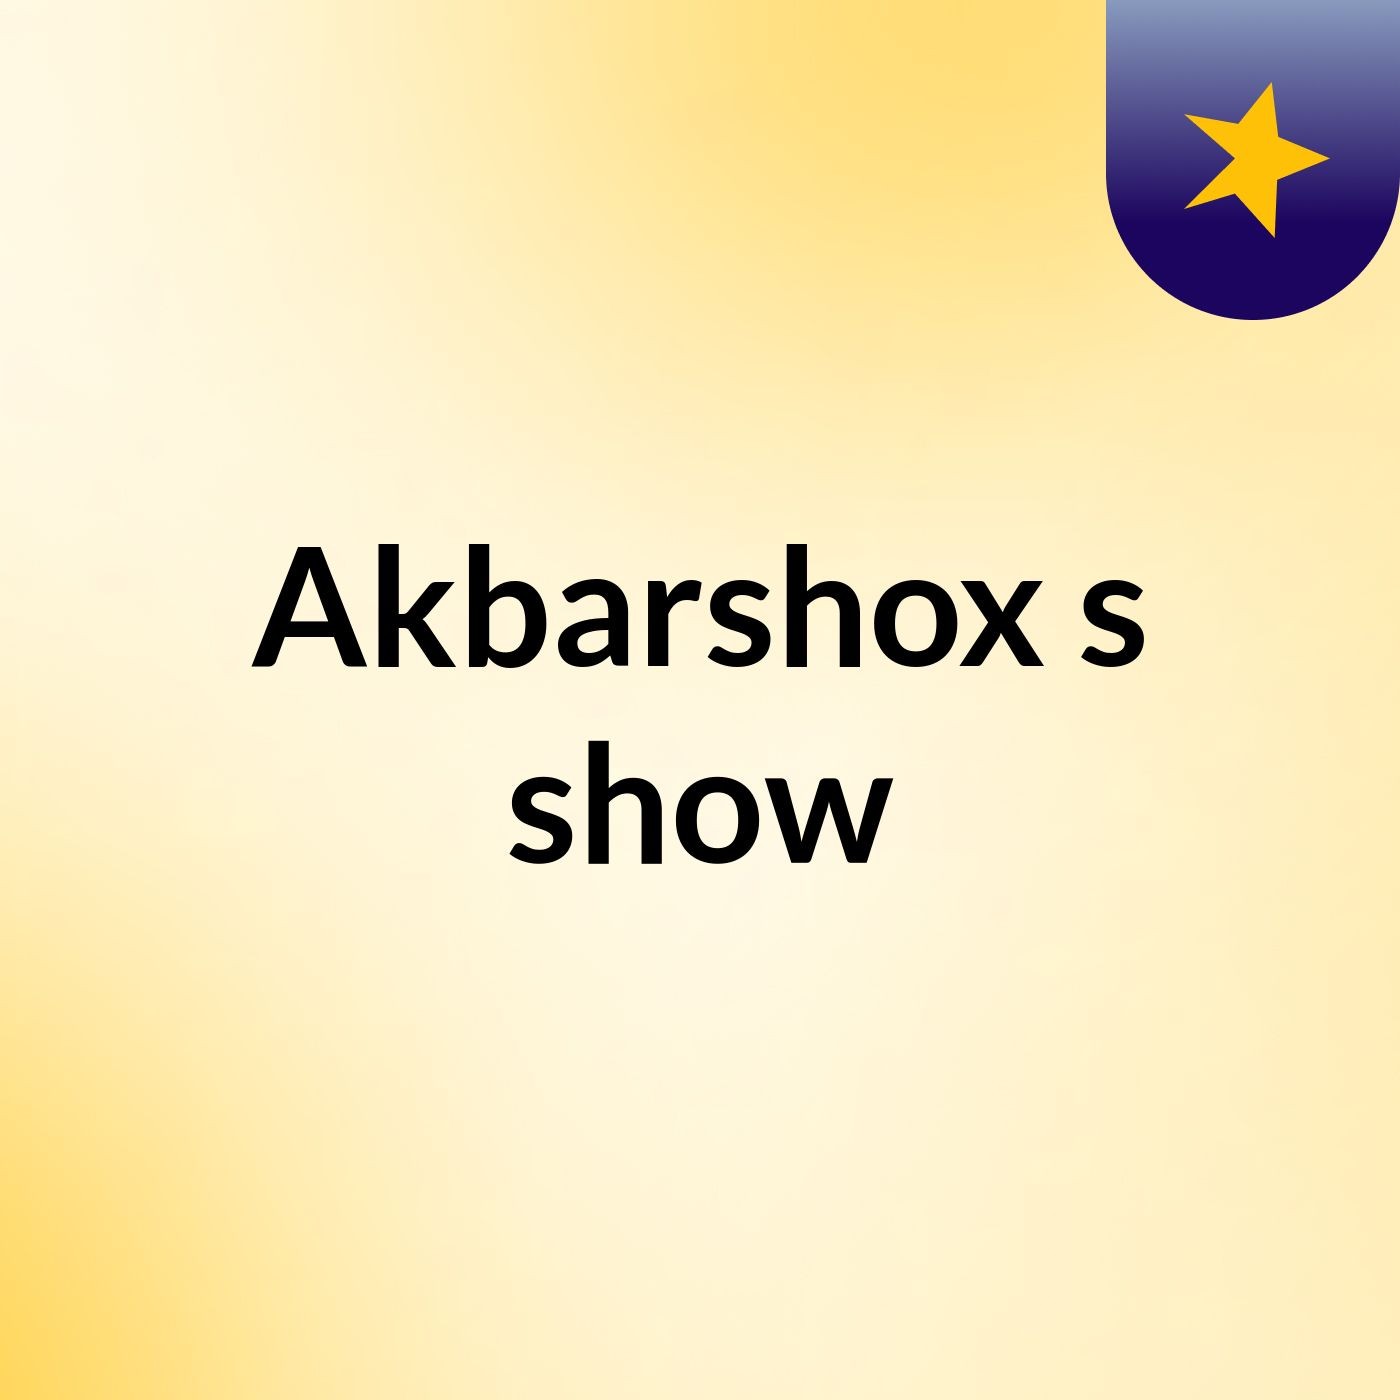 Akbarshox's show